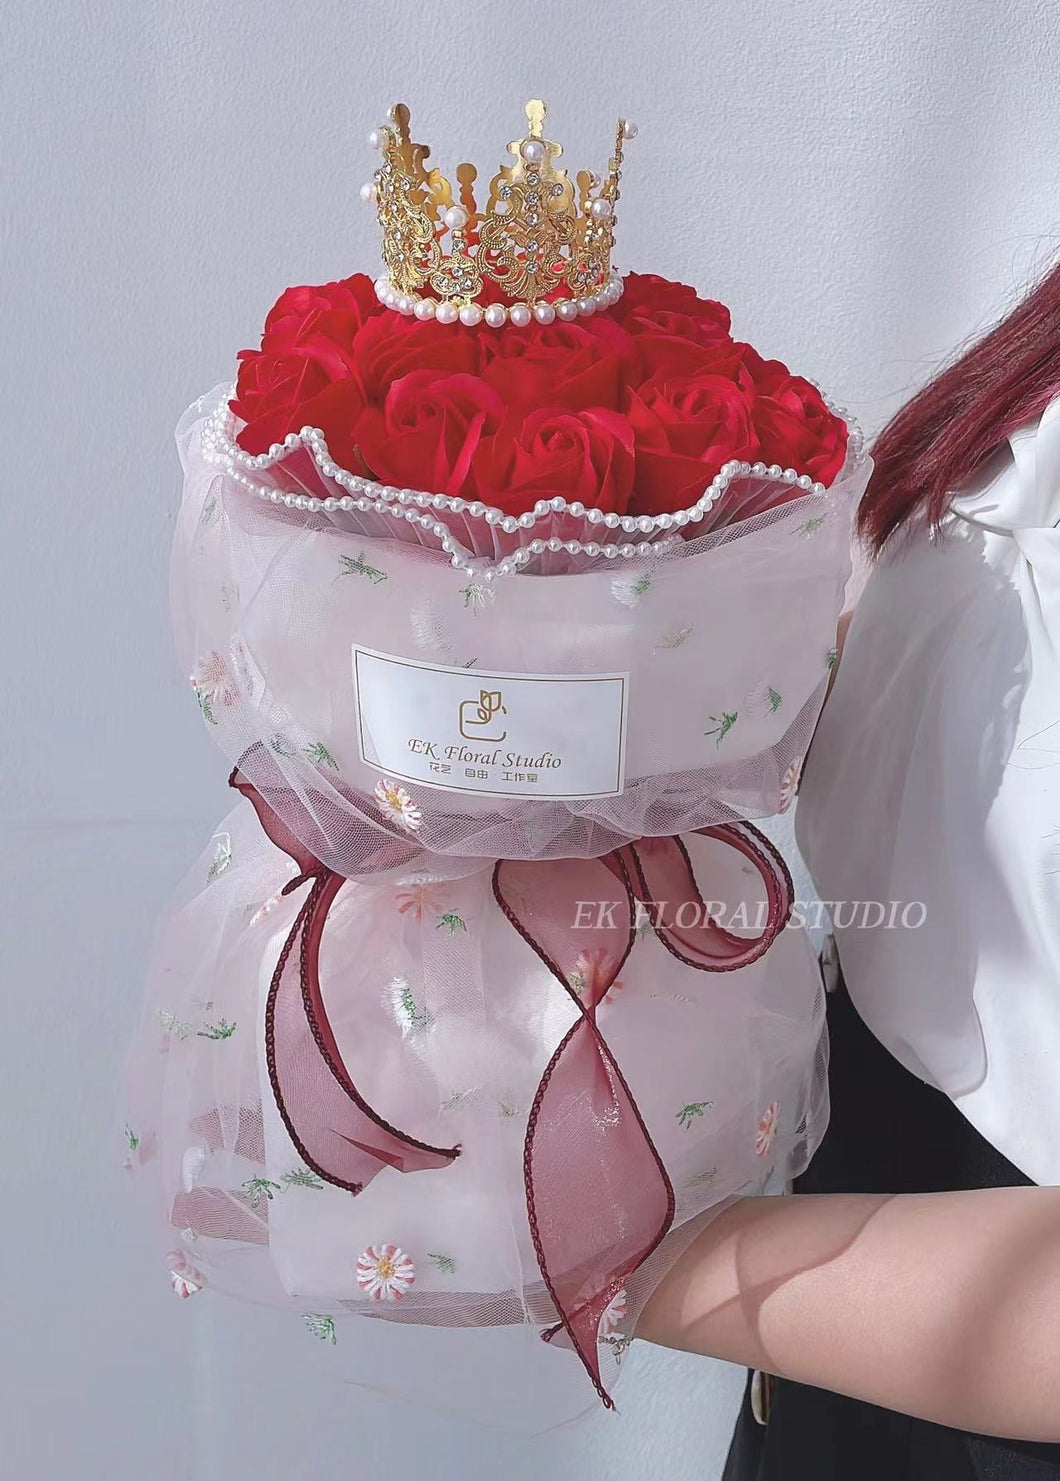 18 Soap Rose Round Bouquet with Crown  皇冠网纱18朵香皂玫瑰圆形花束